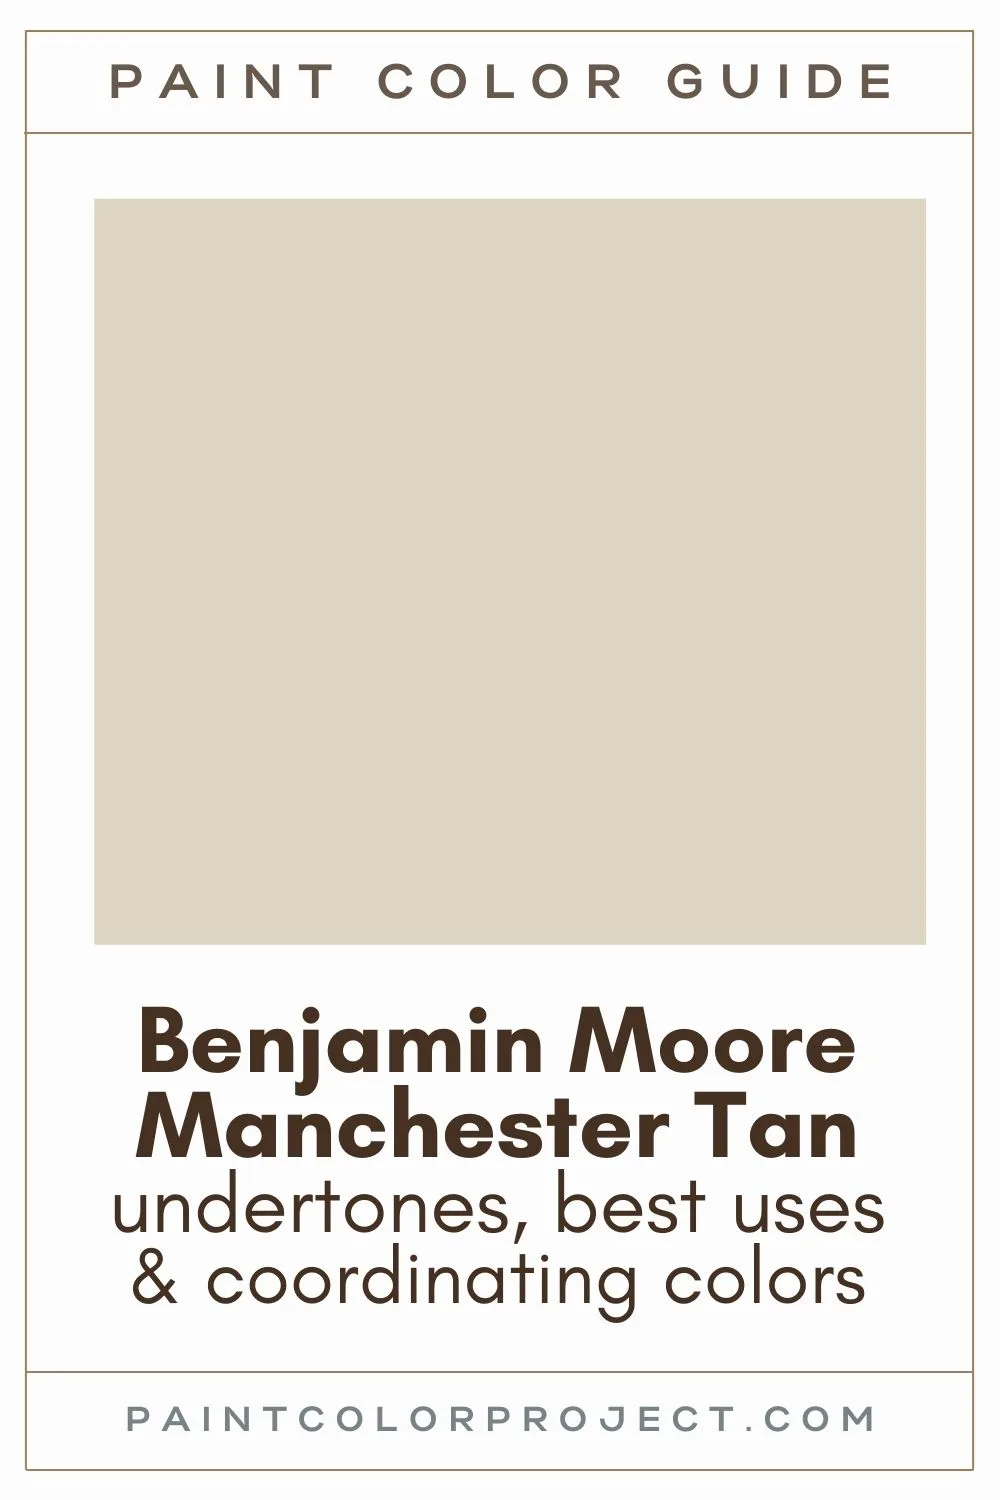 Benjamin Moore Manchester Tan Paint Color Guide.